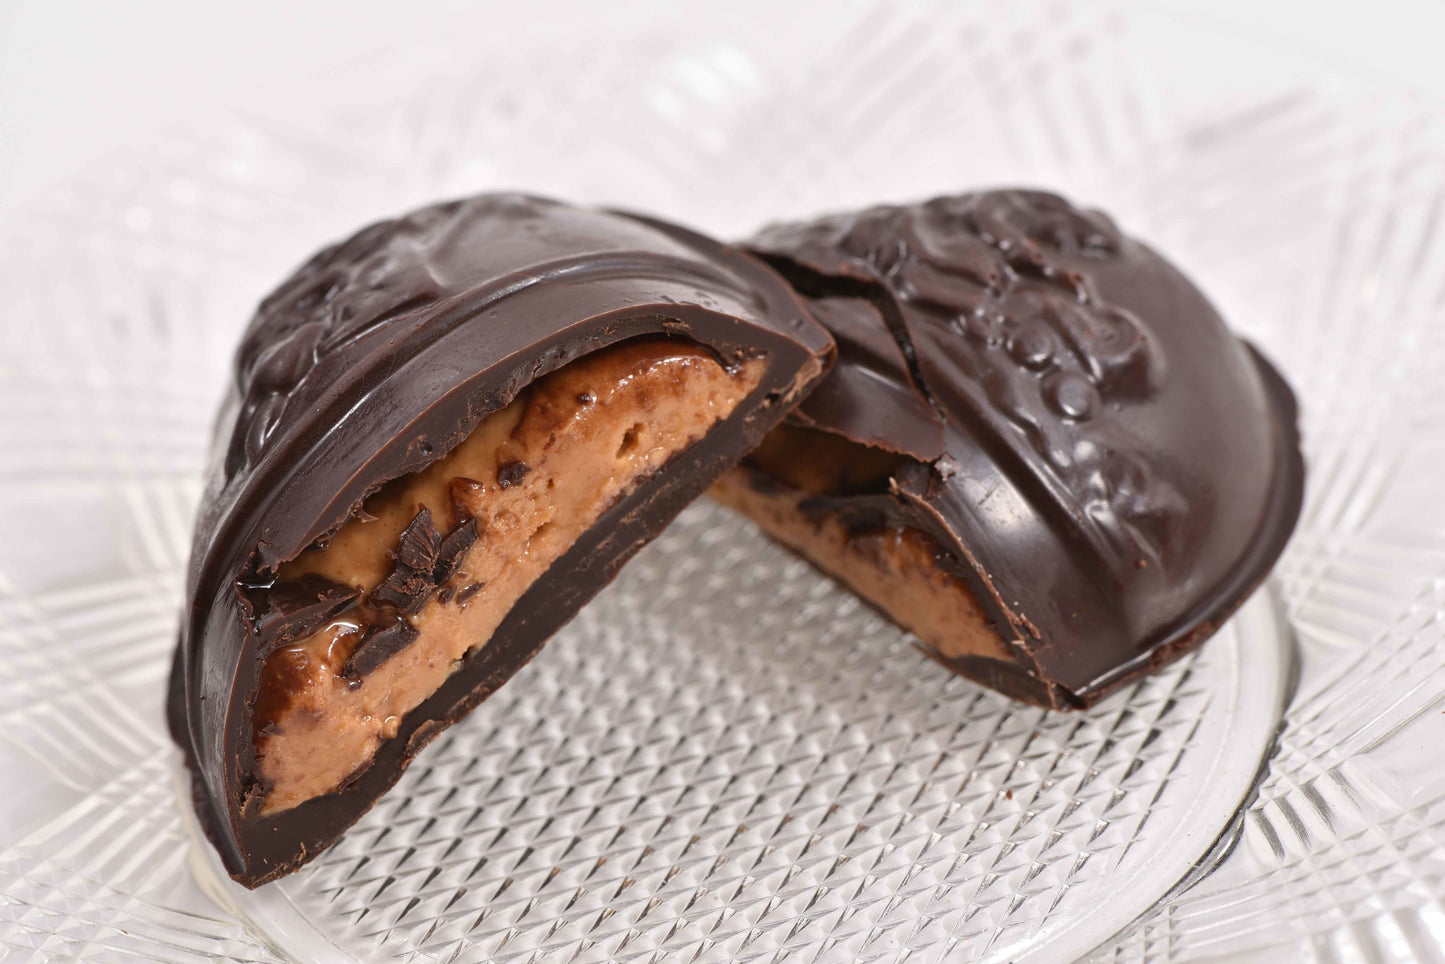 Dark Chocolate Big Foiled Peanut Butter Egg - Conrad's Confectionery